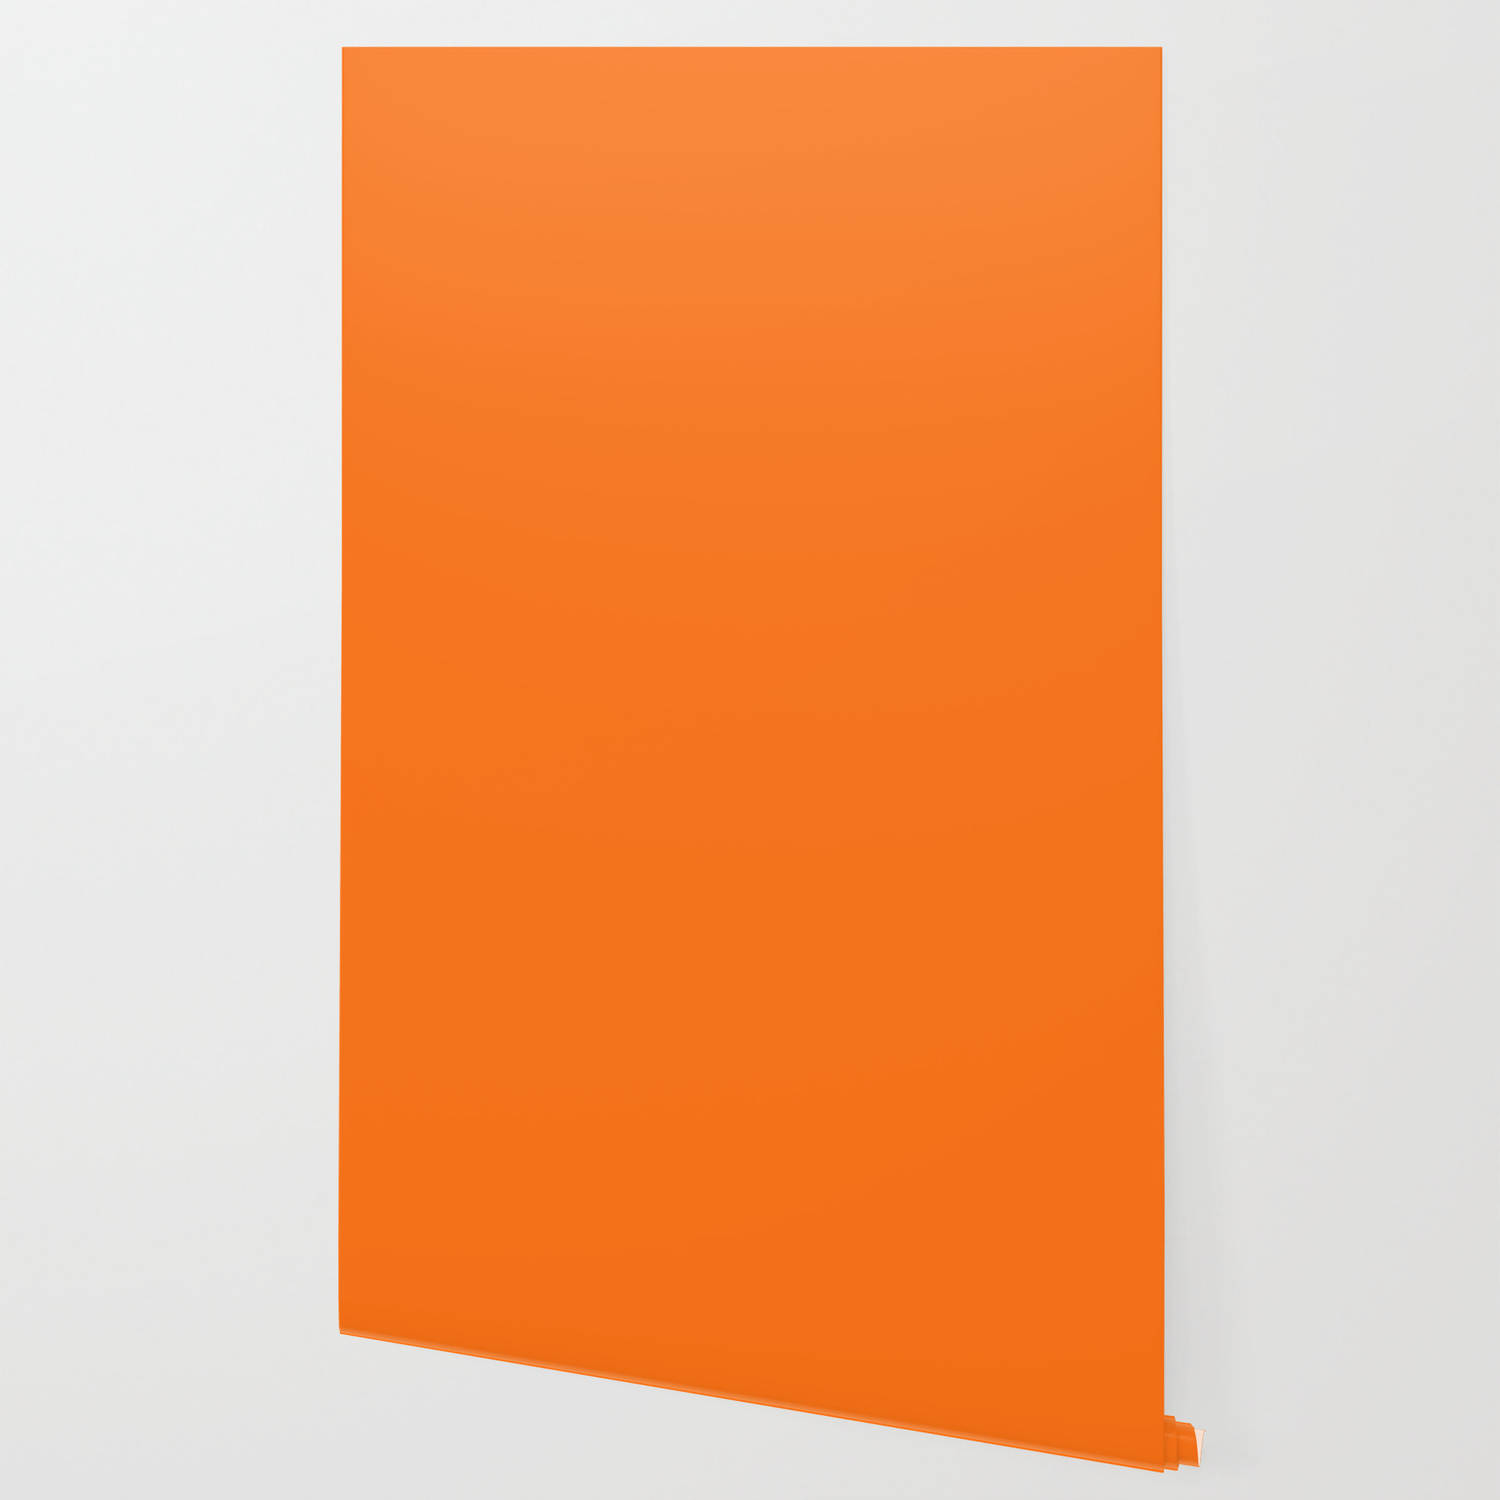 A Vibrant and Bold Solid Orange Color Wallpaper